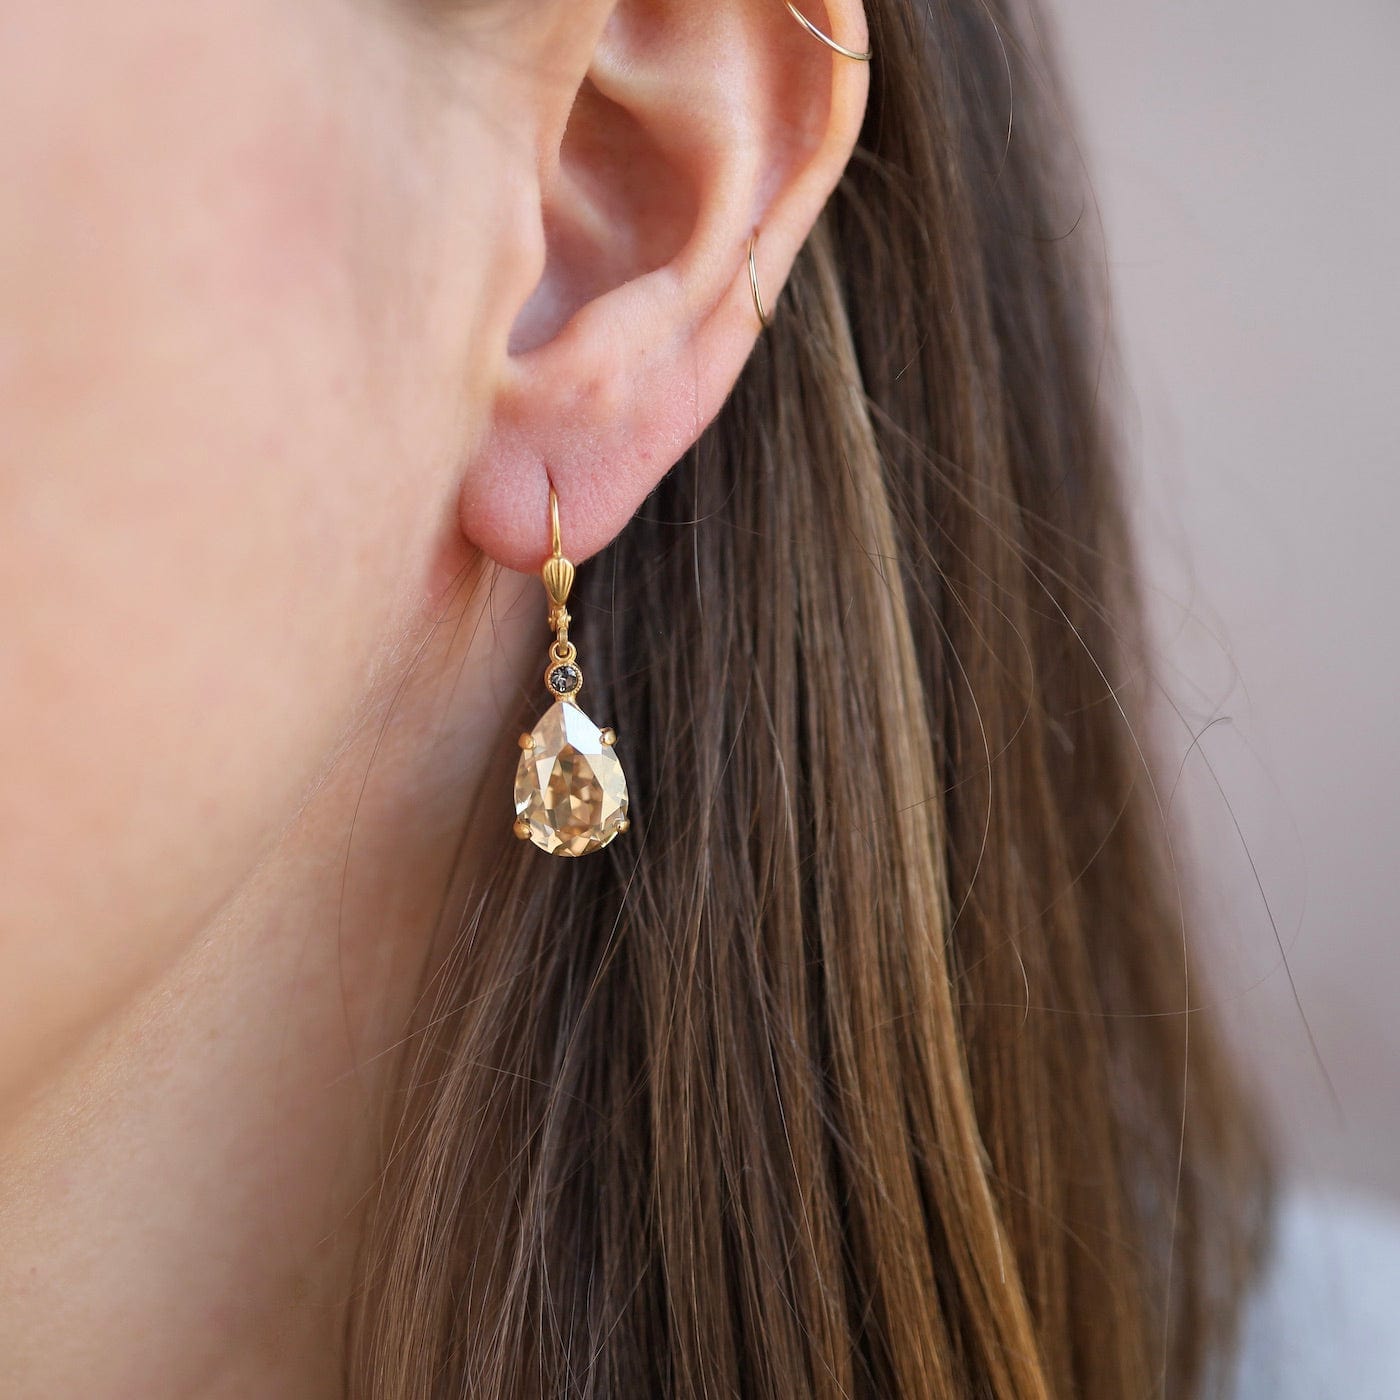 EAR-JM Teardrop Earring with Champagne Crystals